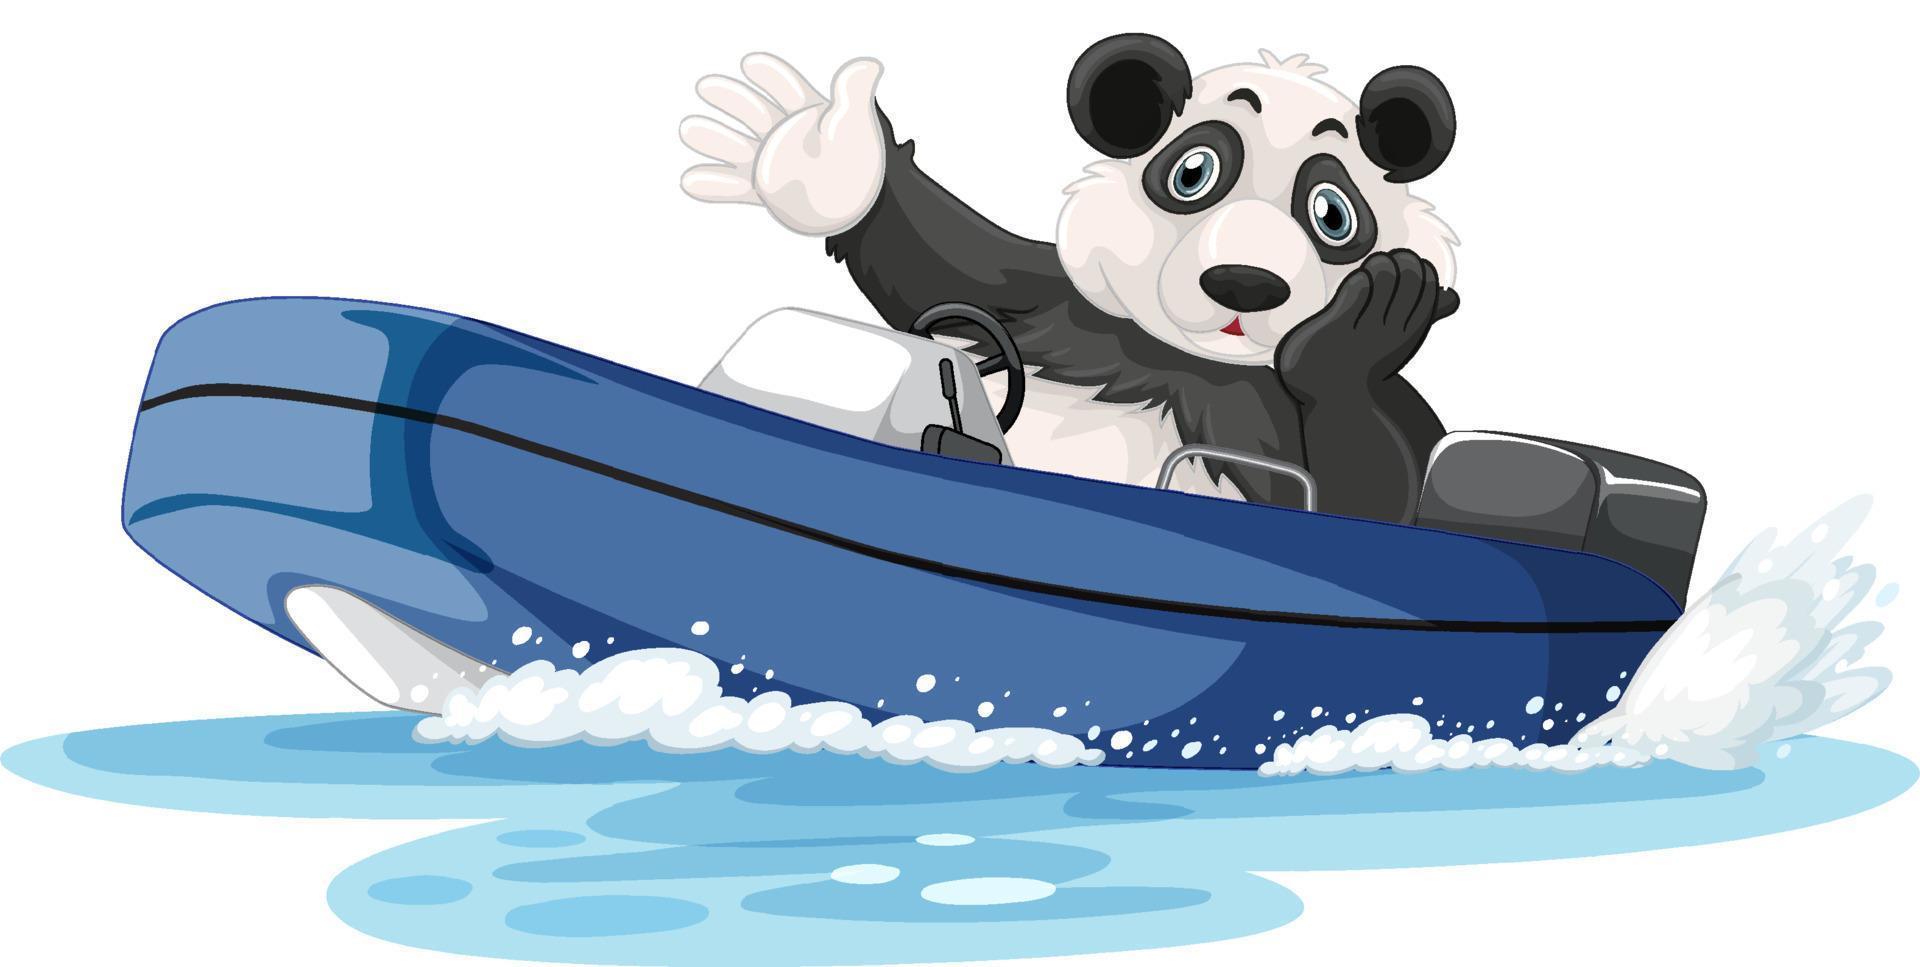 Panda on a motor boat in cartoon style vector